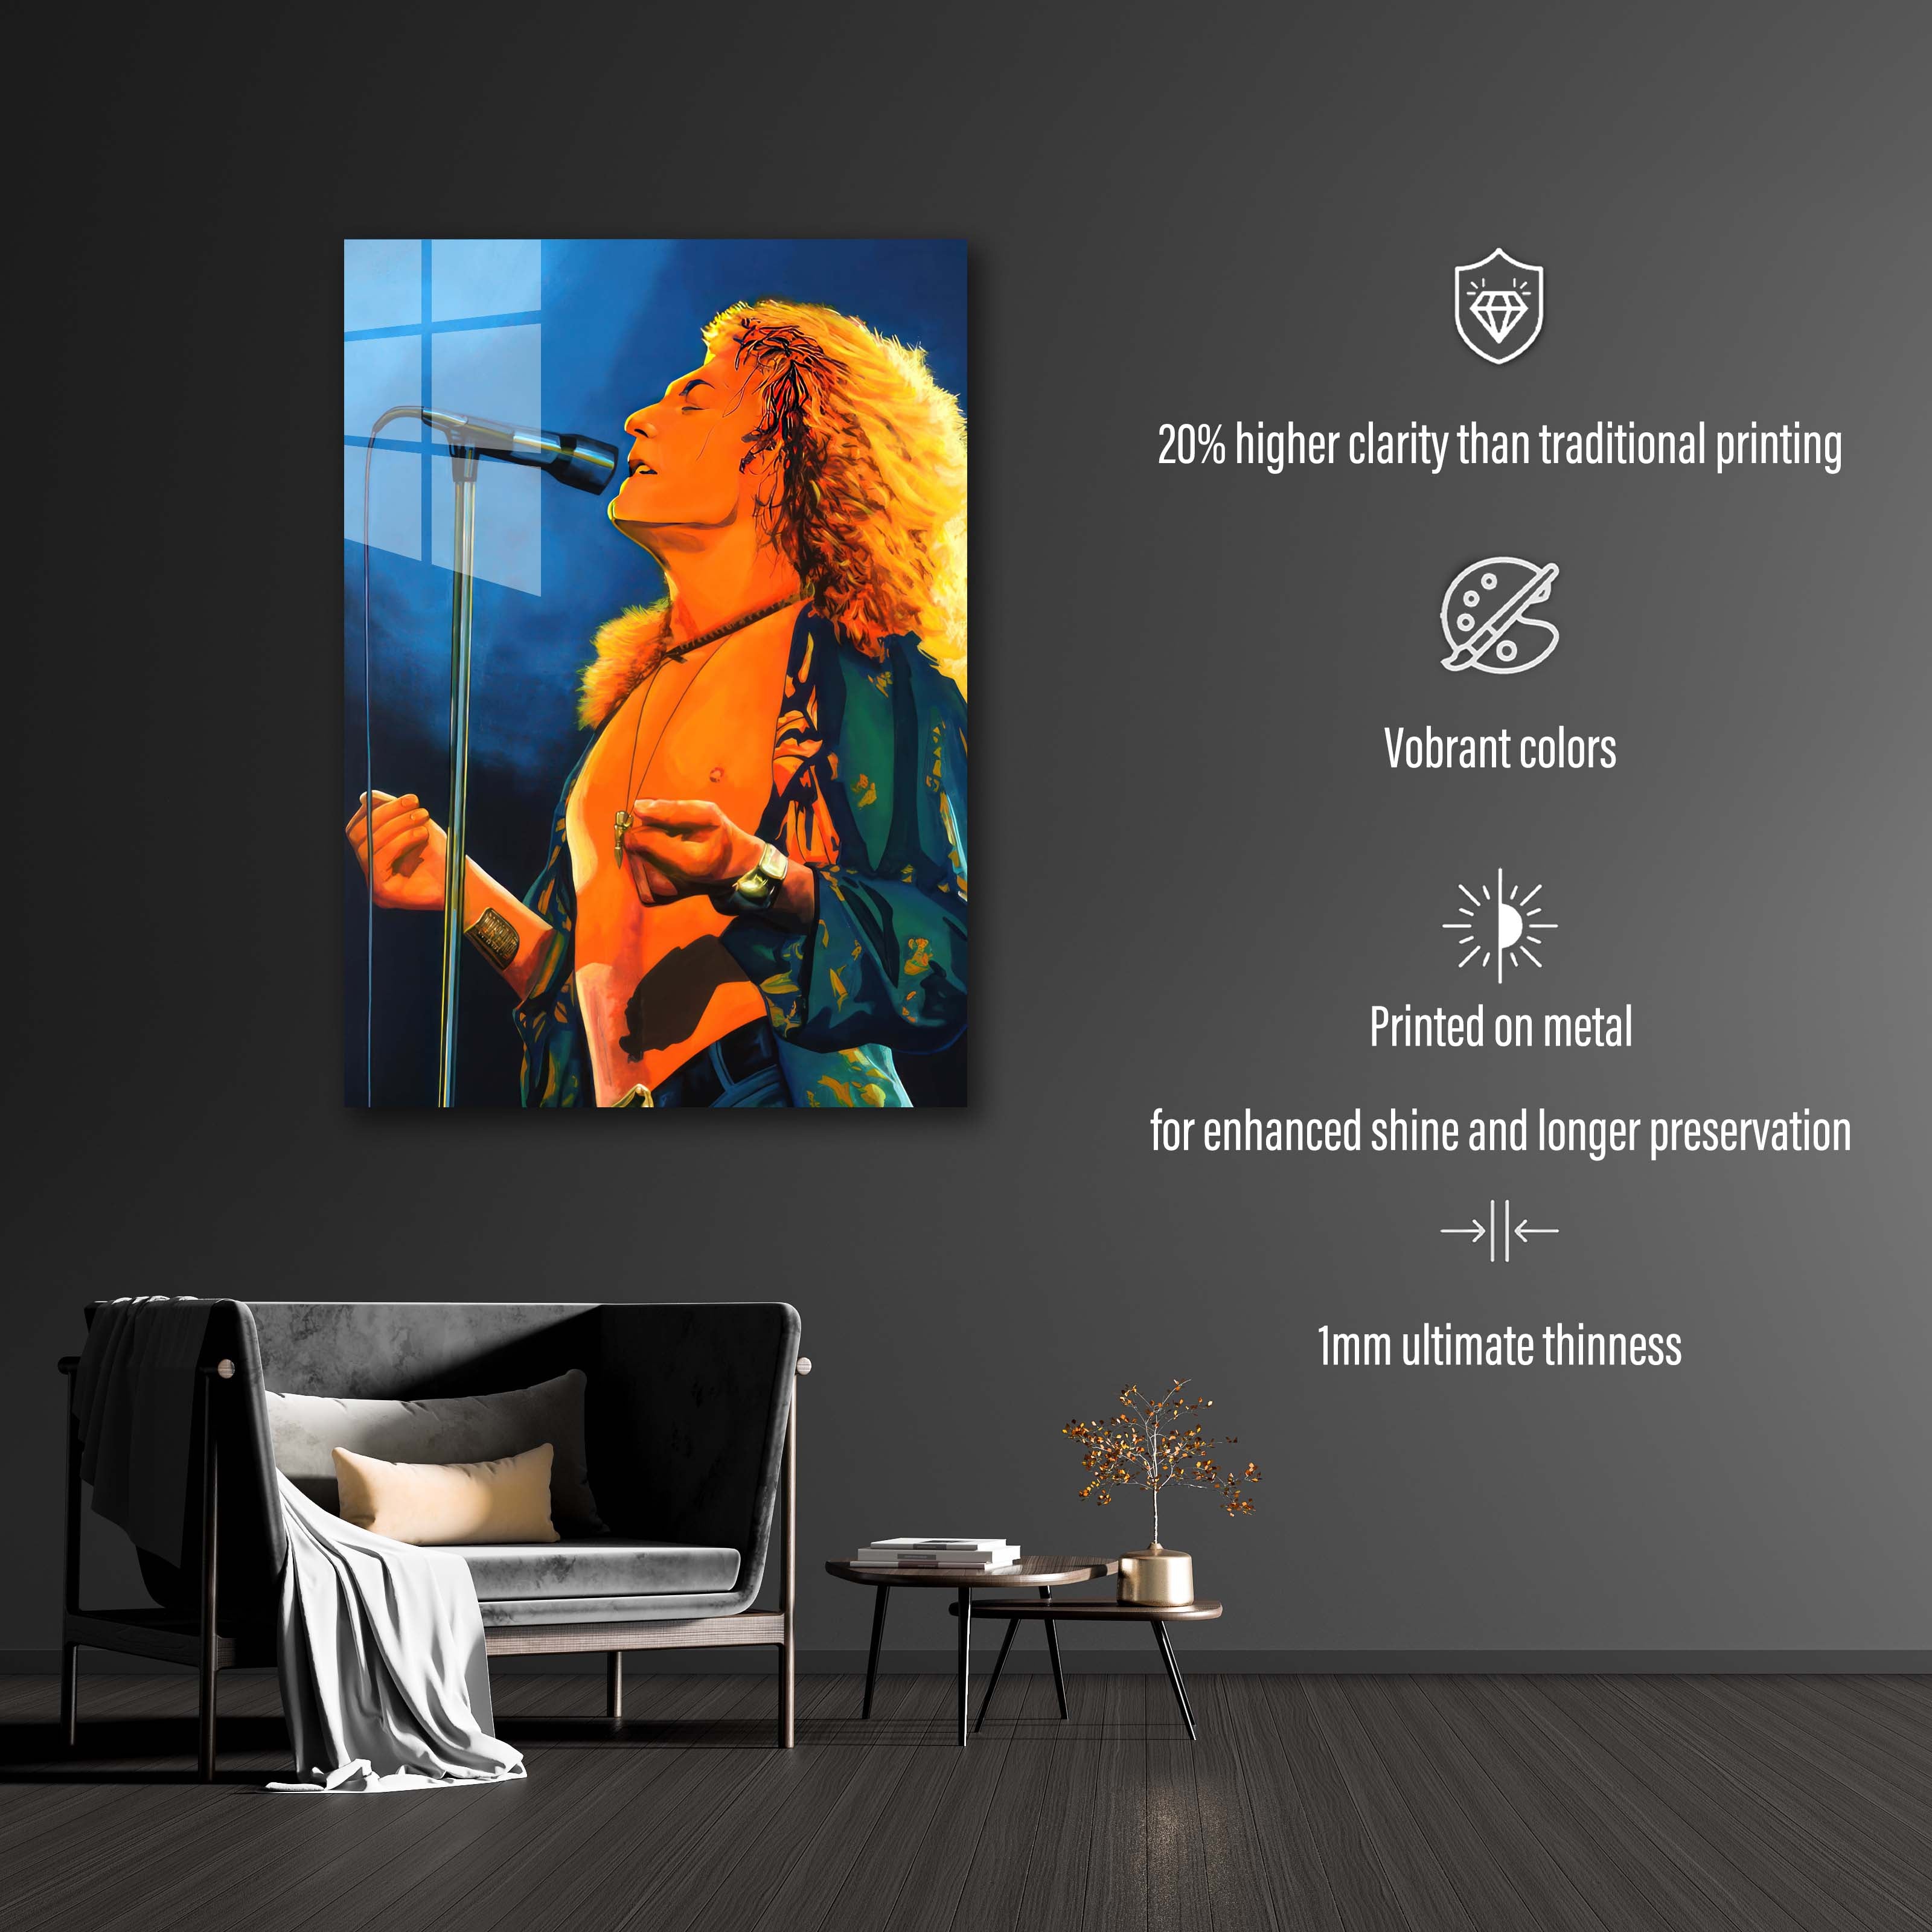 Robert Plant-designed by @Vinahayum